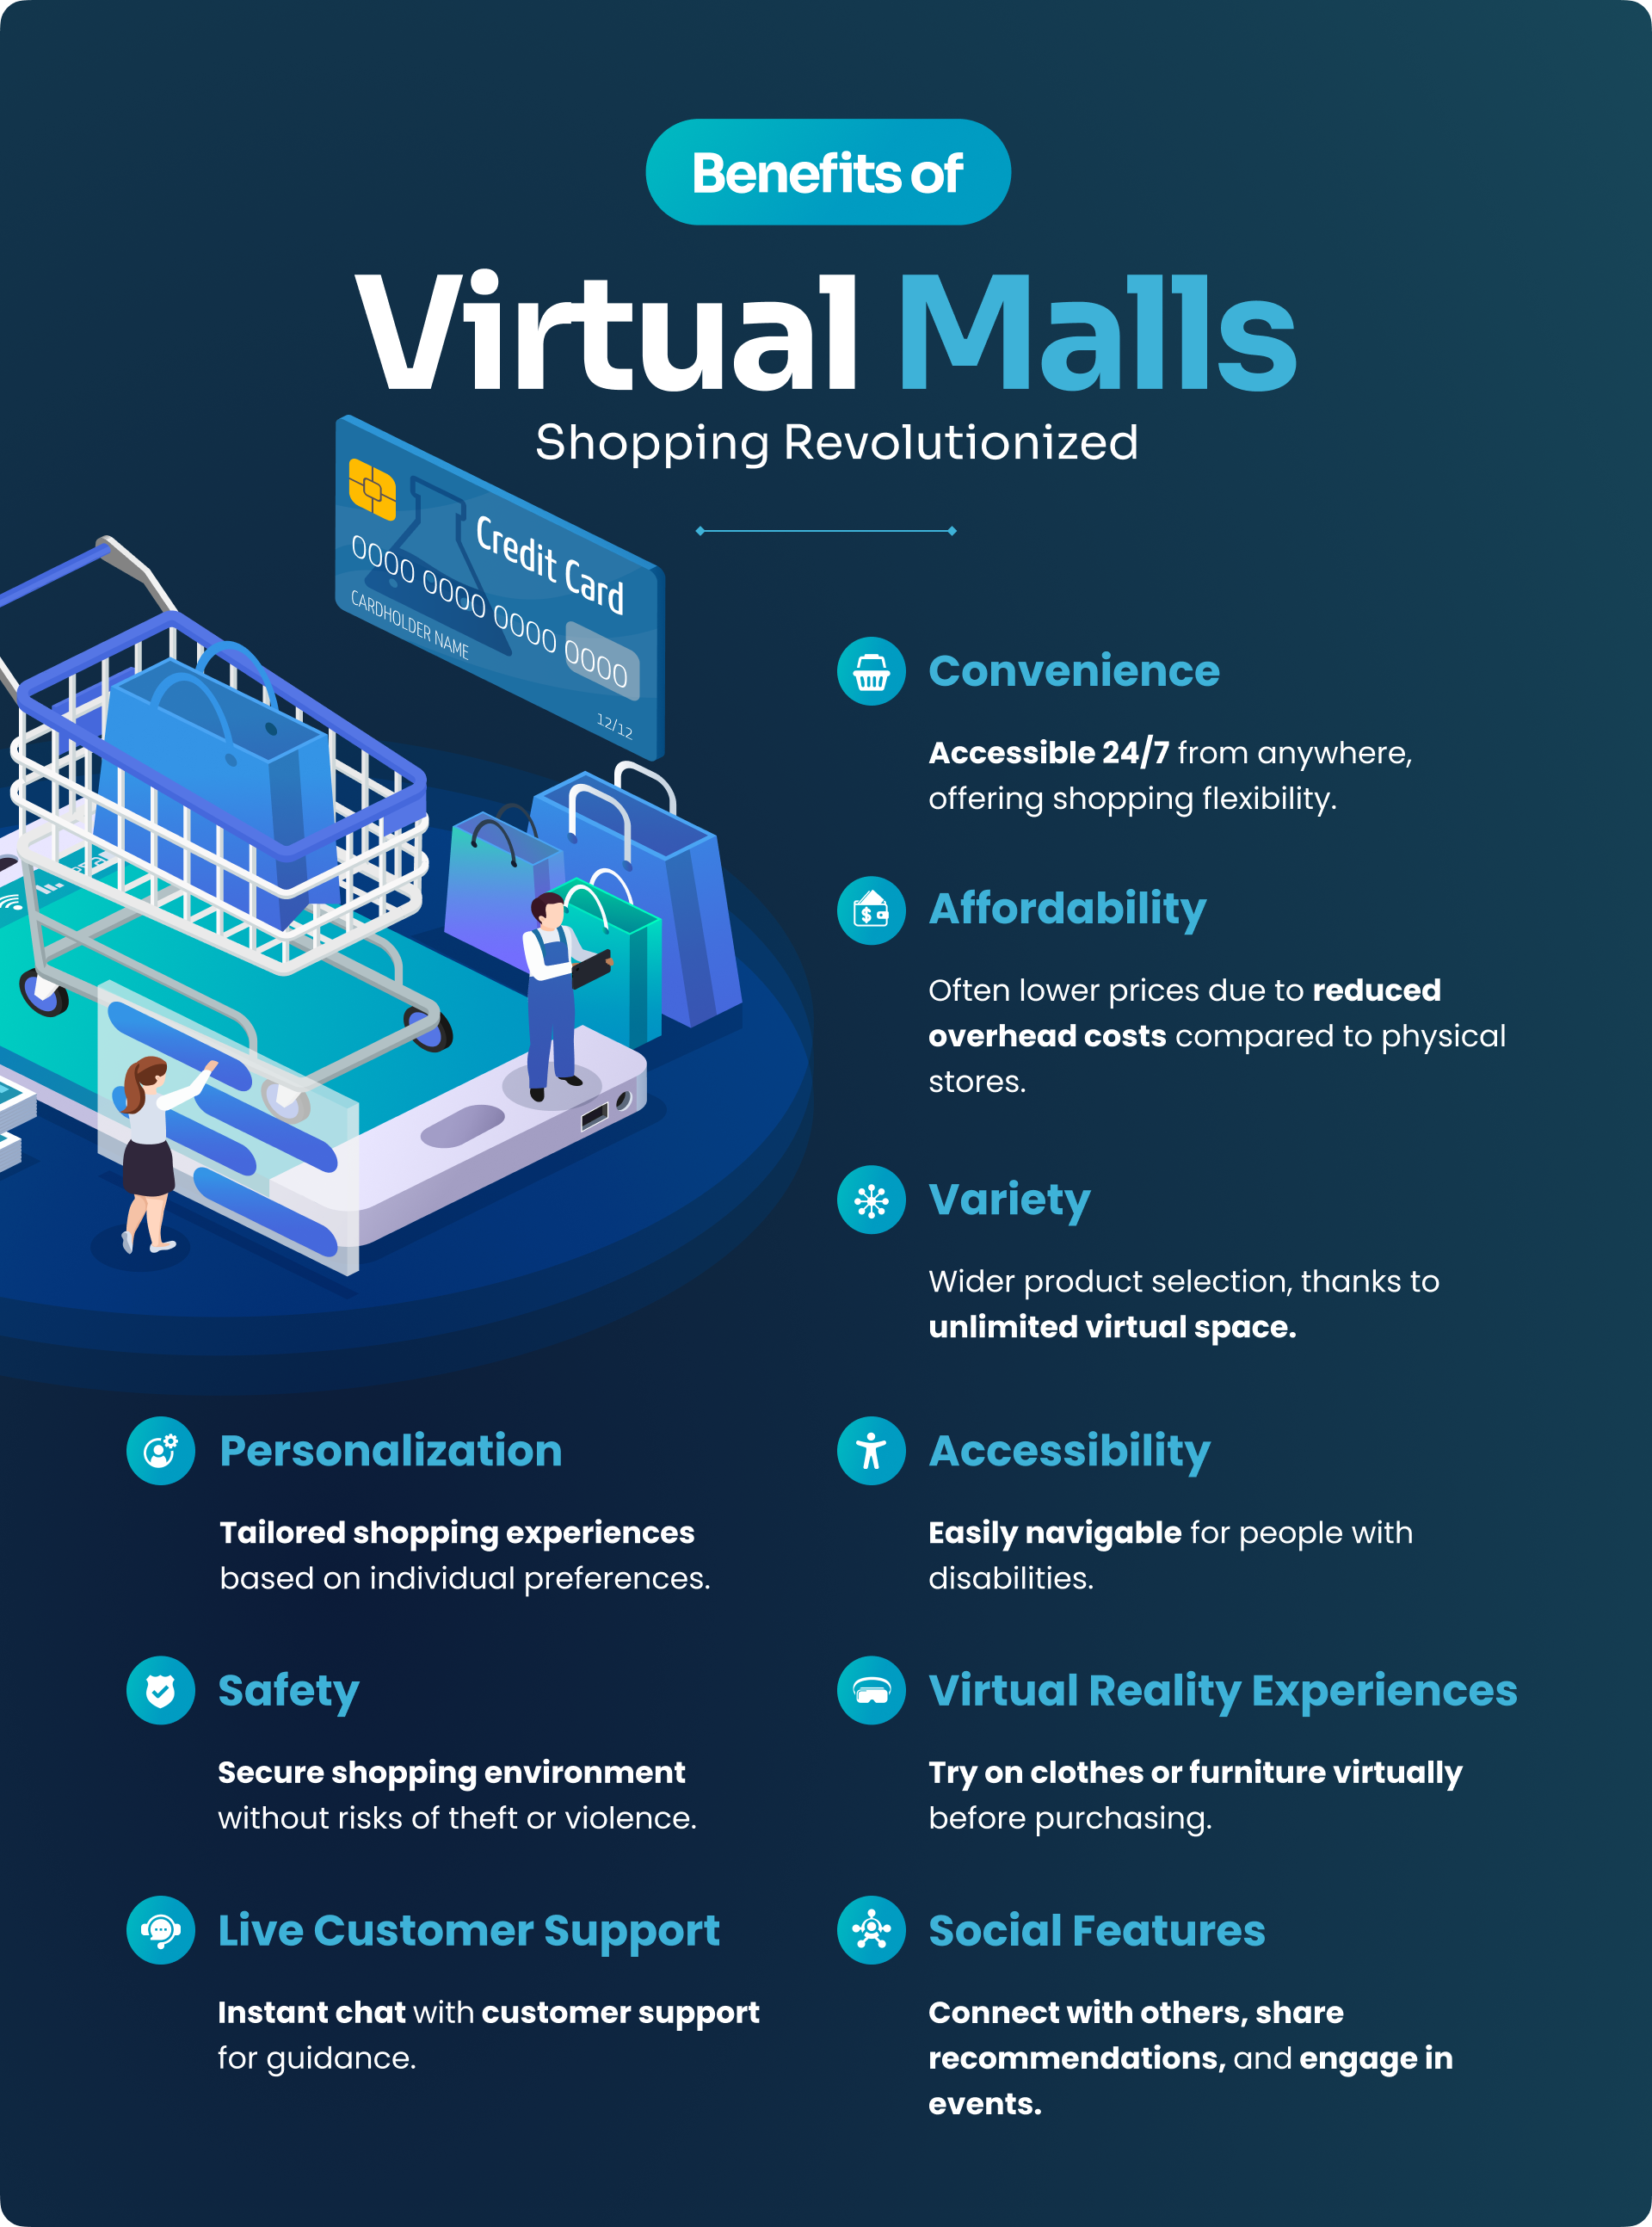 Benefits of Virtual Malls